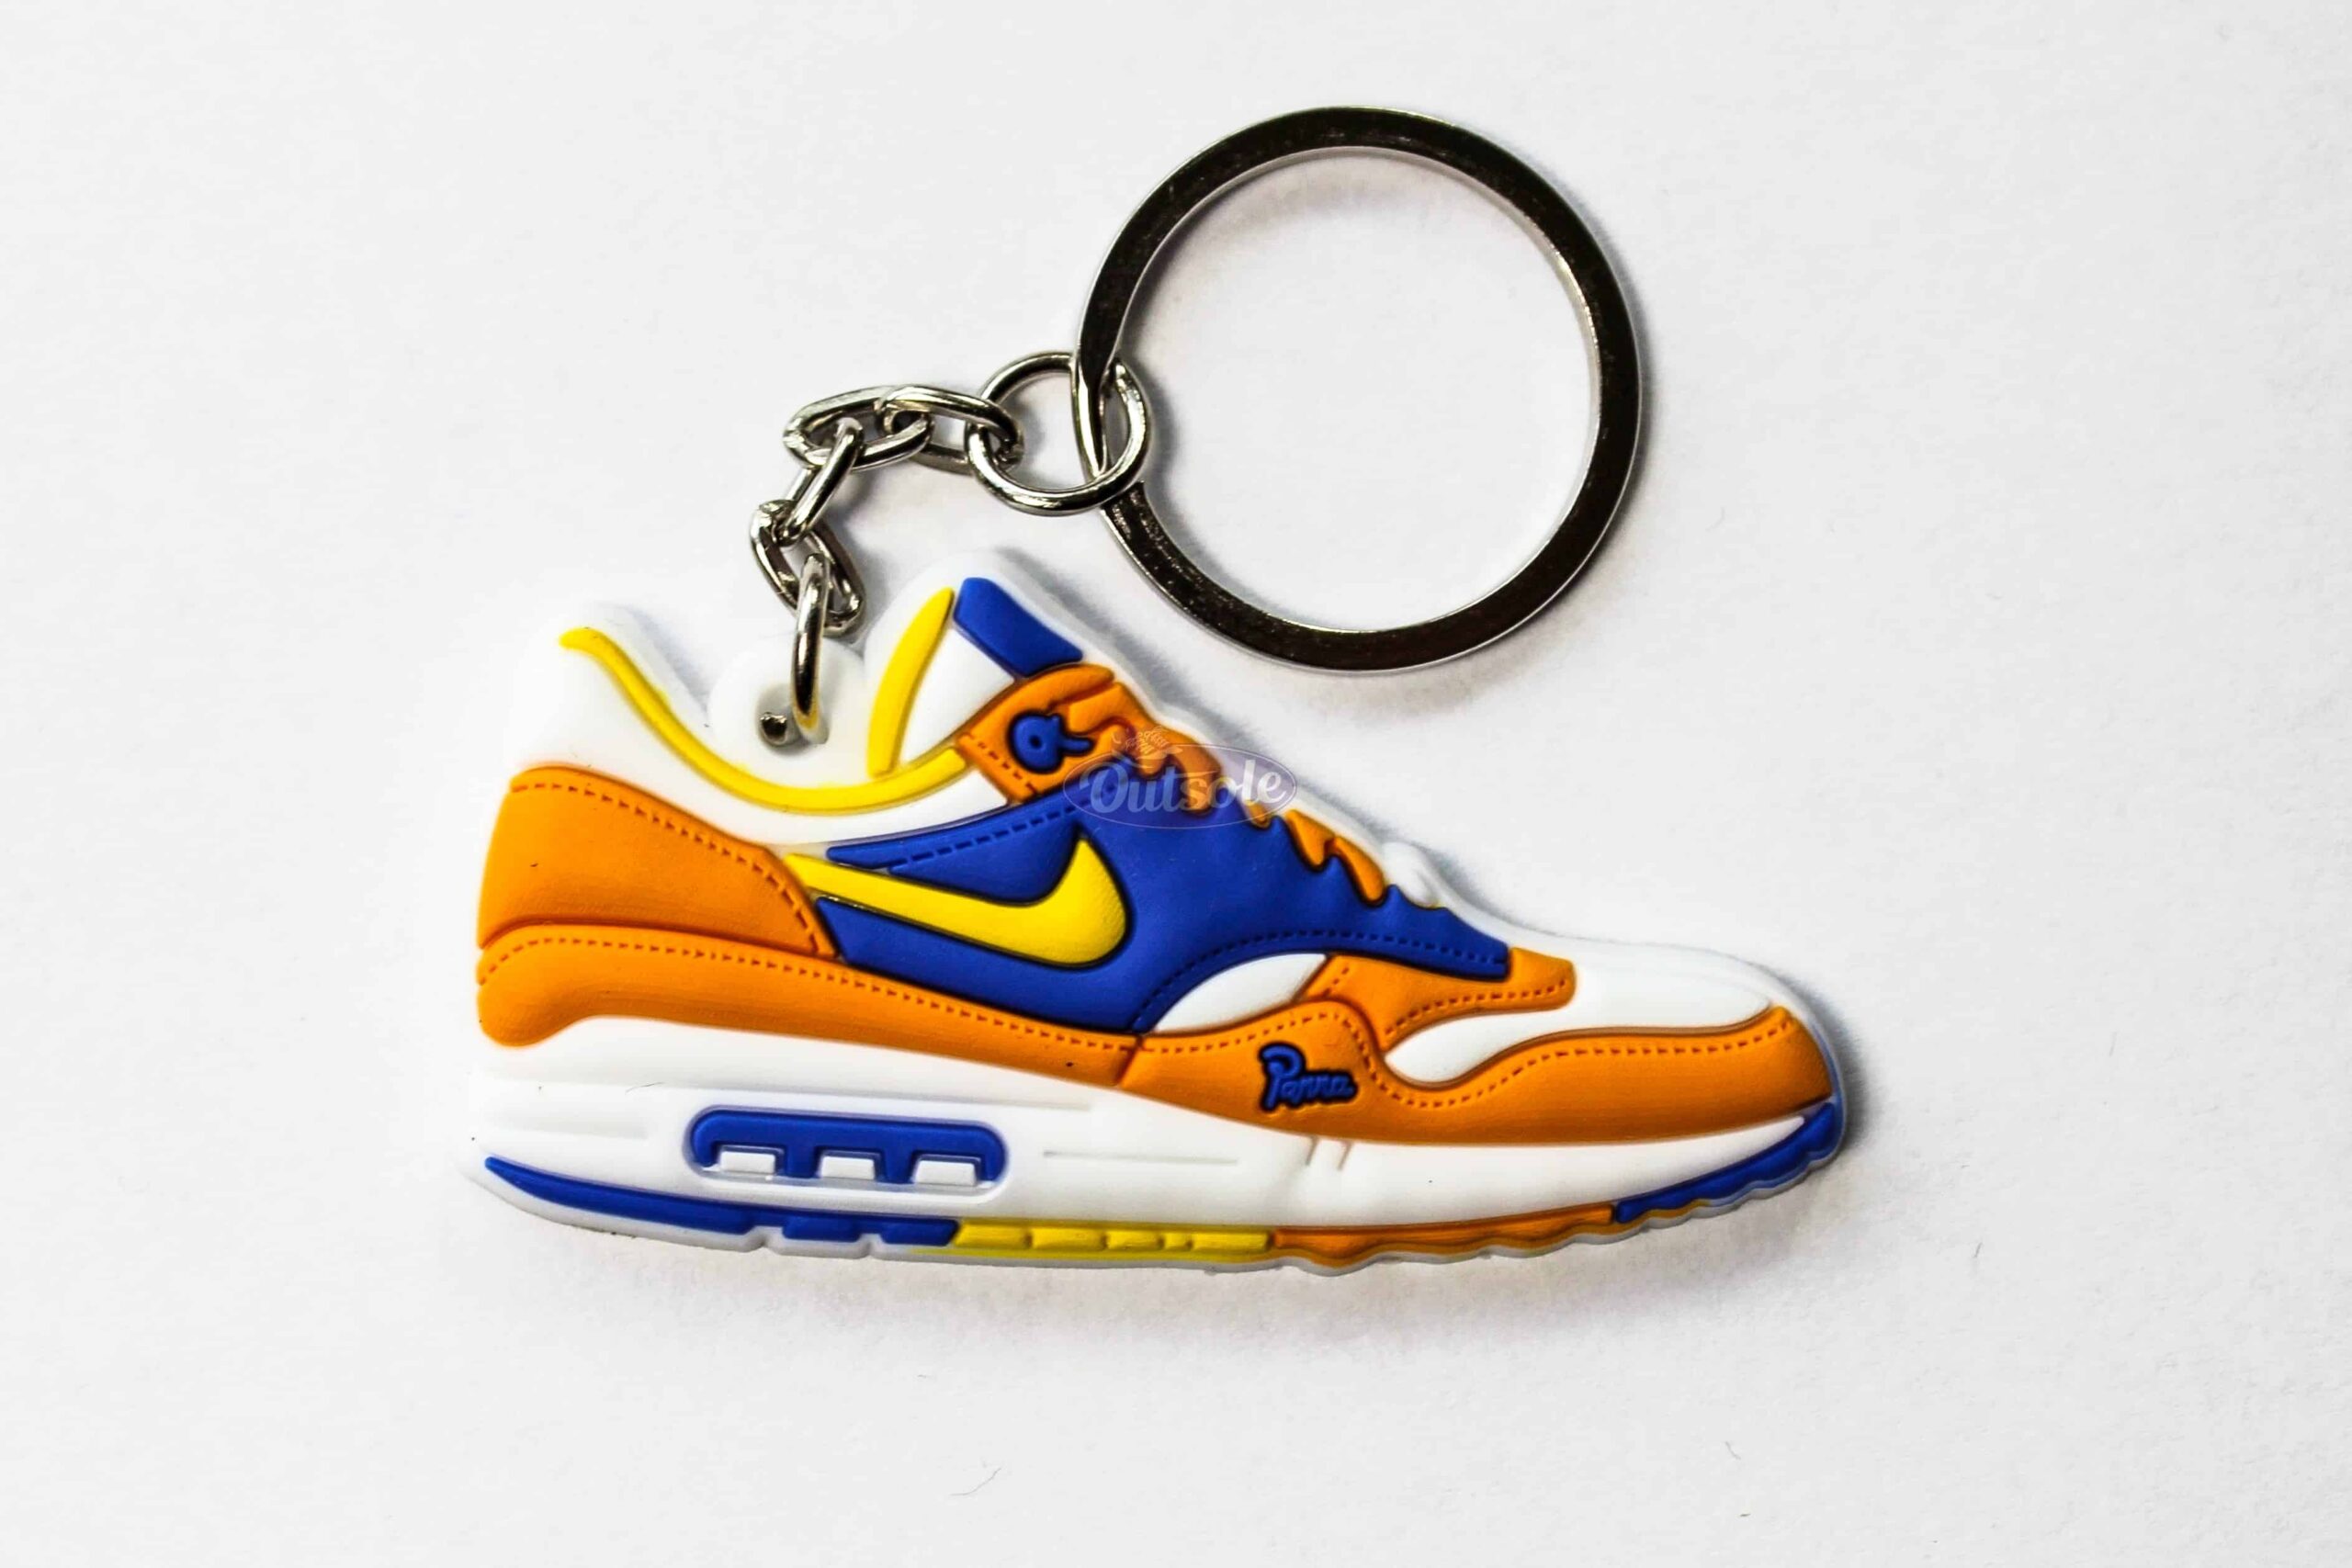 Nike Air Max 1 Albert Heijn keychain 